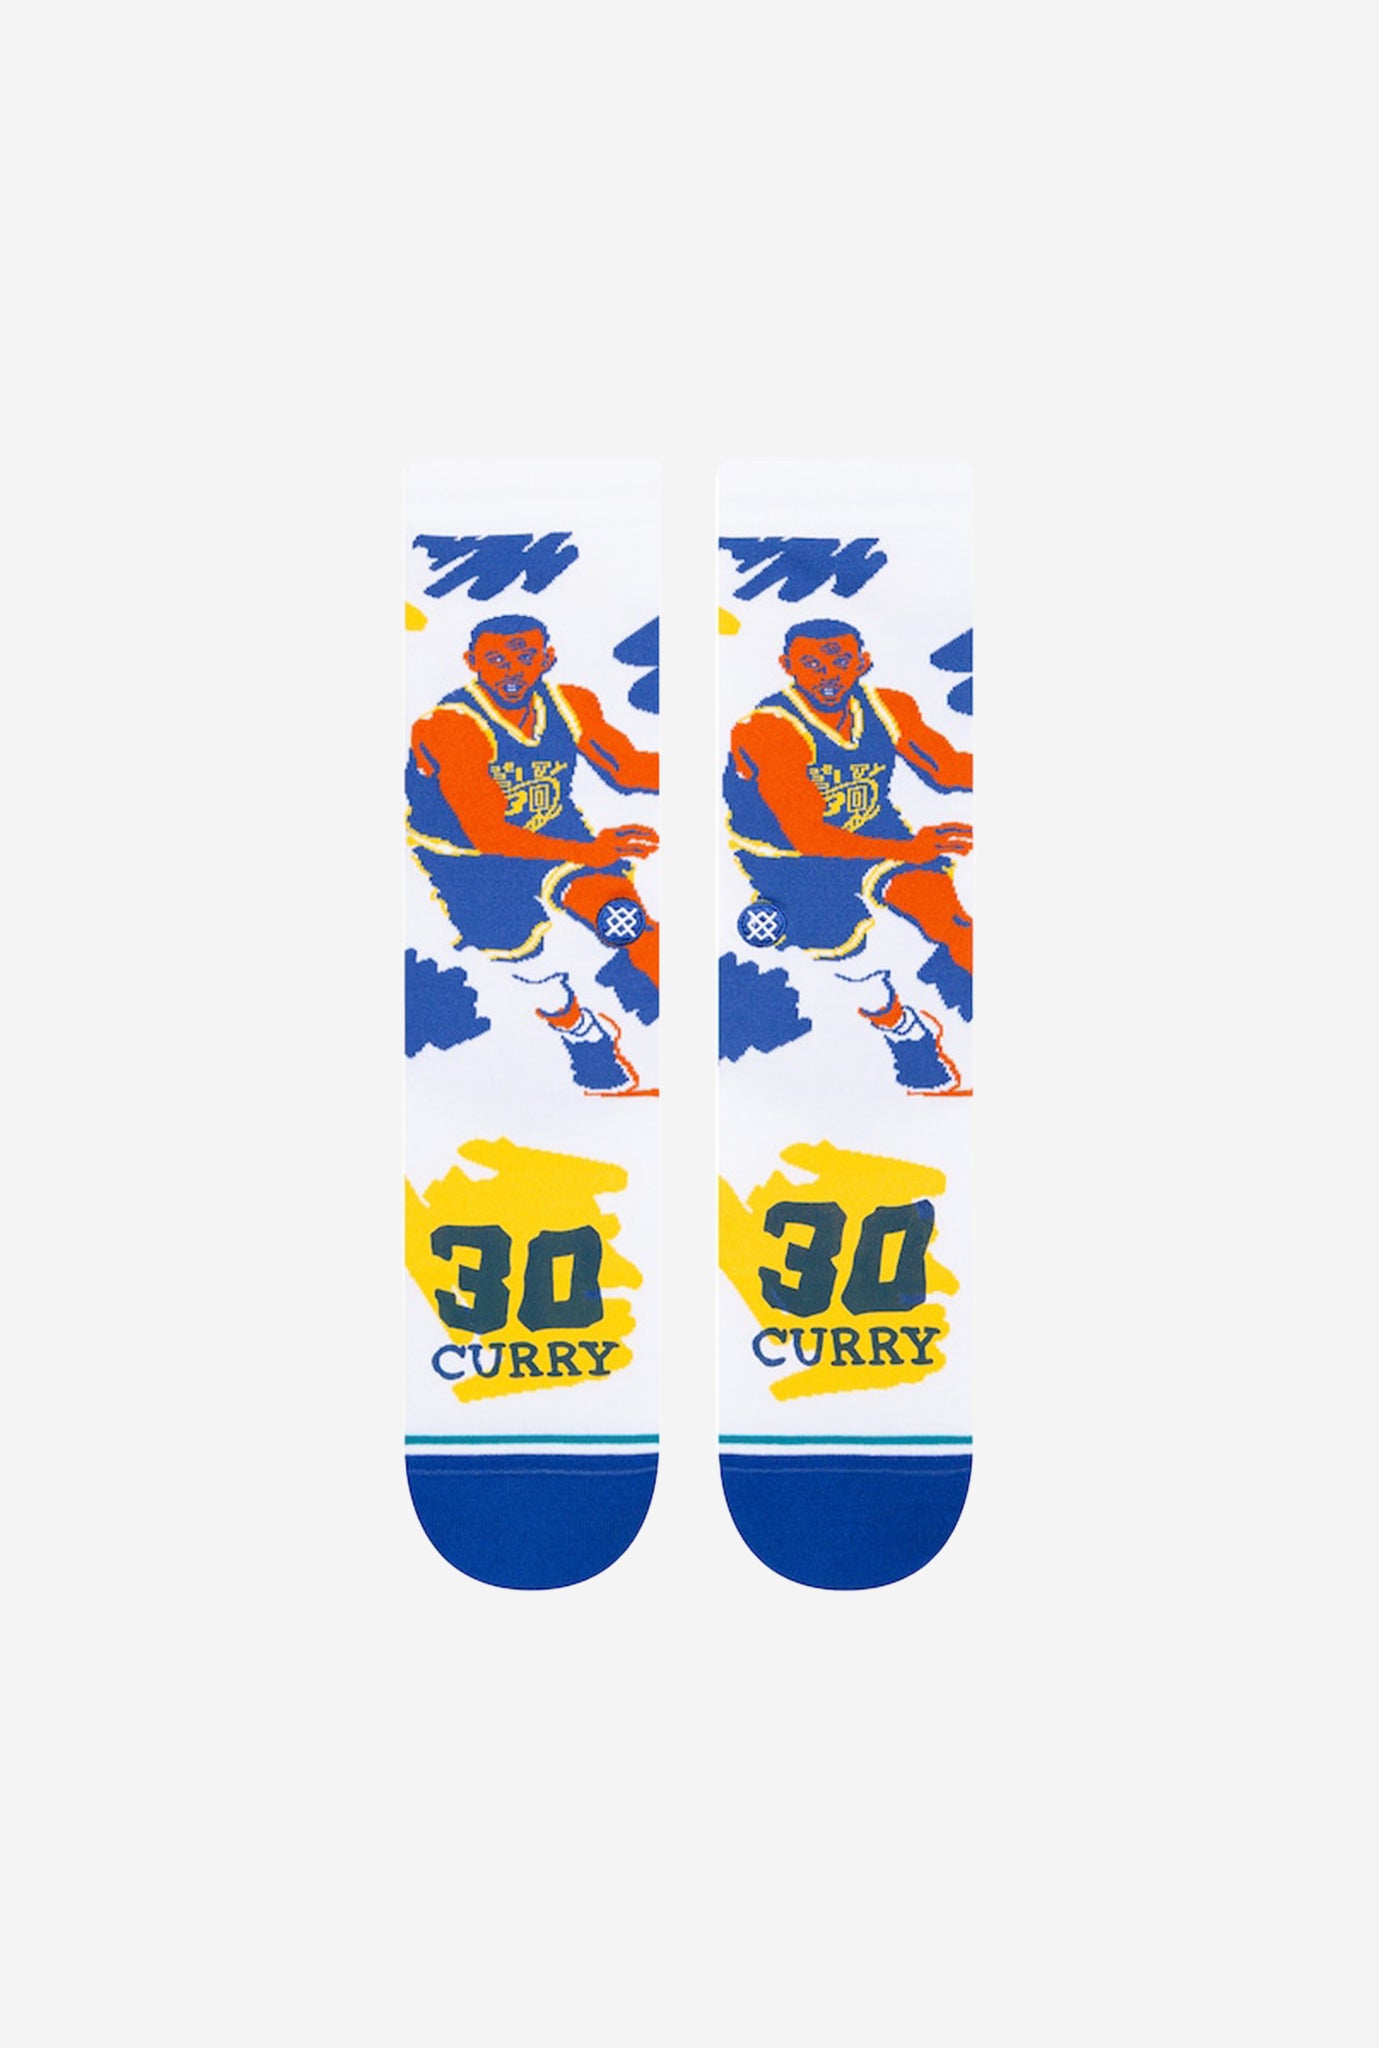 Steph Curry Paint Socks - White